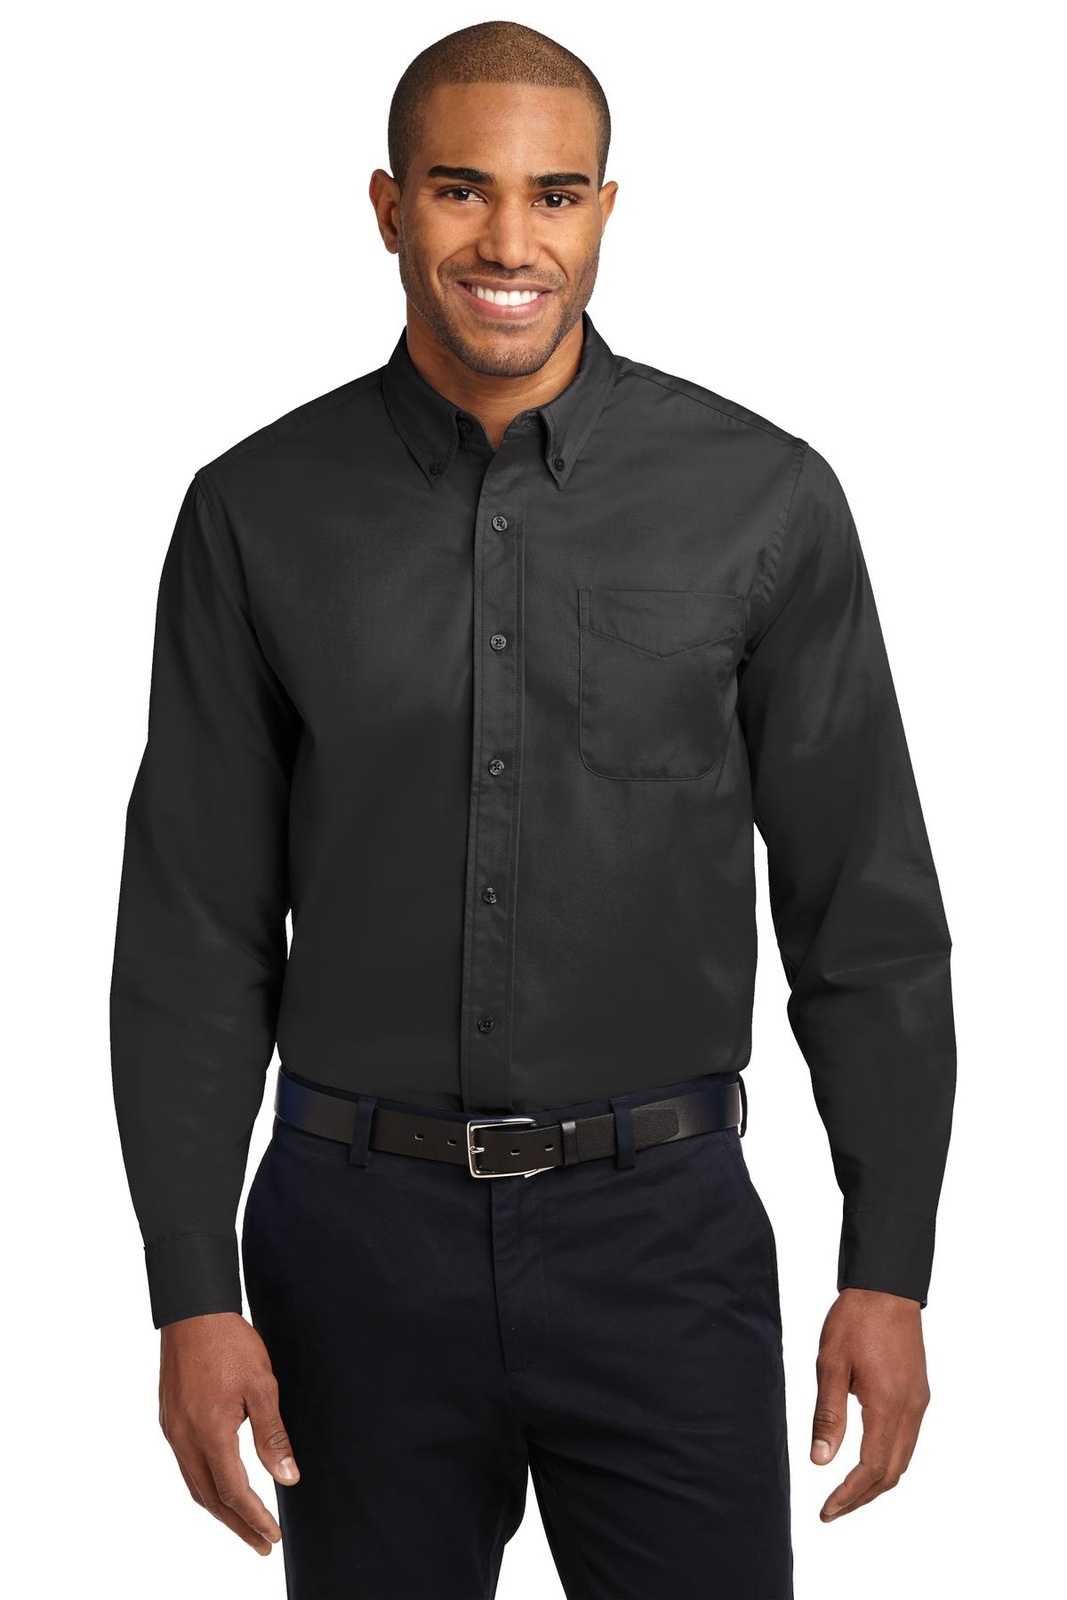 Port Authority S608 Long Sleeve Easy Care Shirt - Black Light Stone - HIT a Double - 1